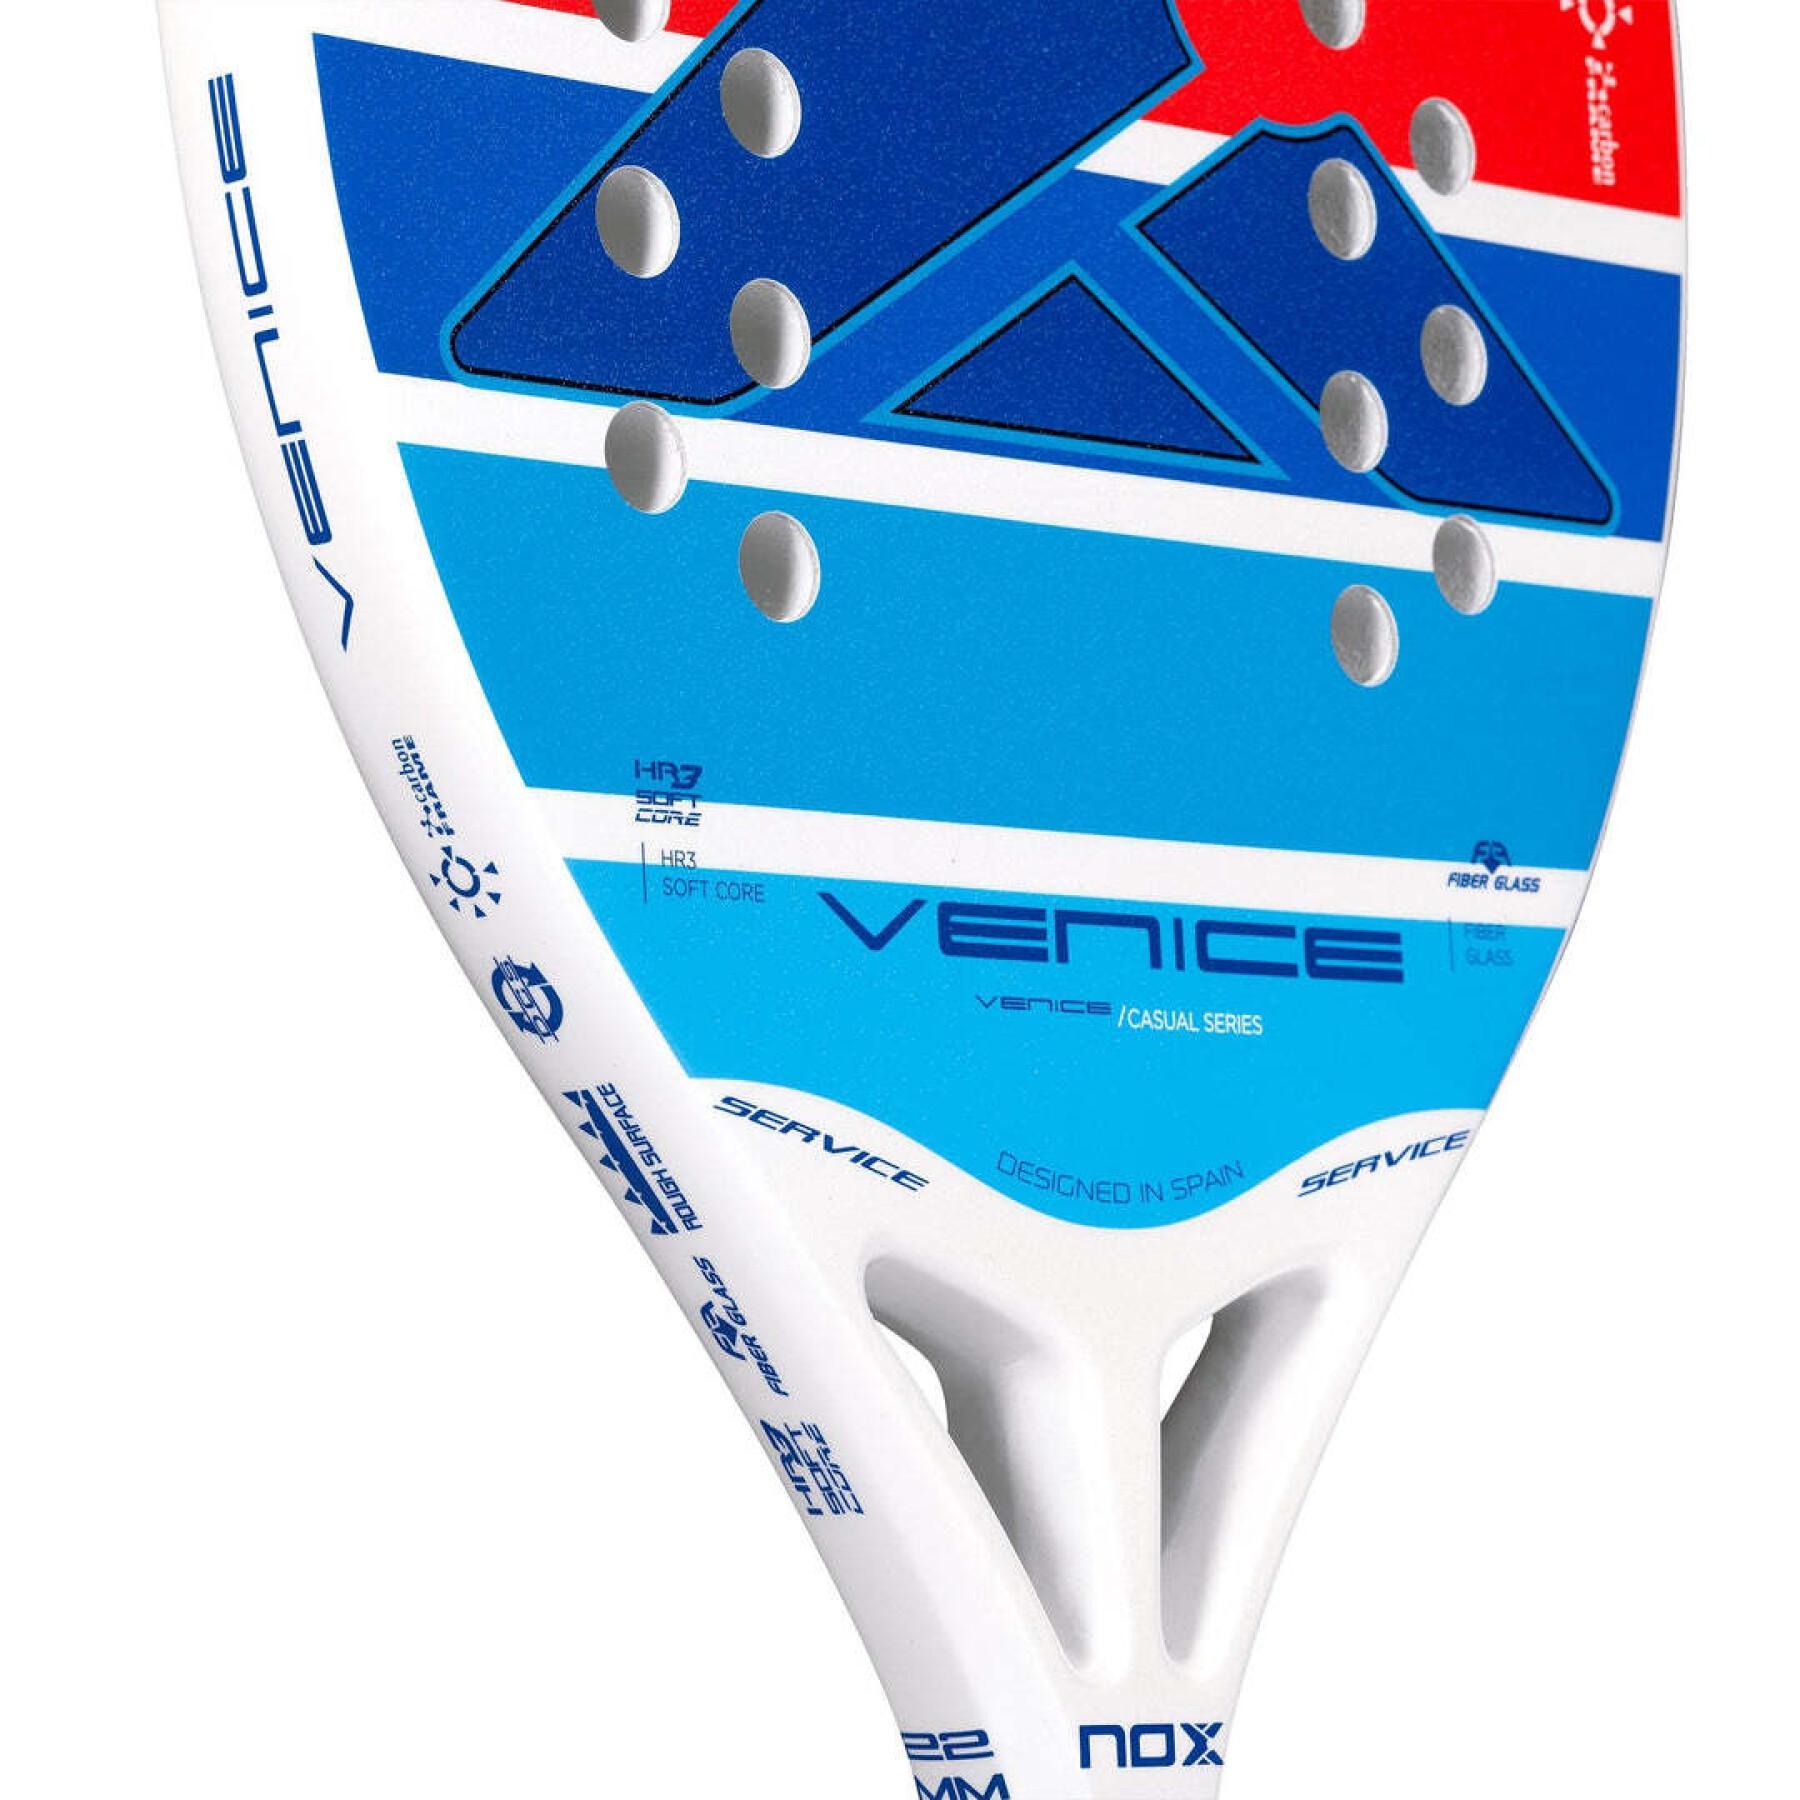 Racket from padel Nox Casual Venice